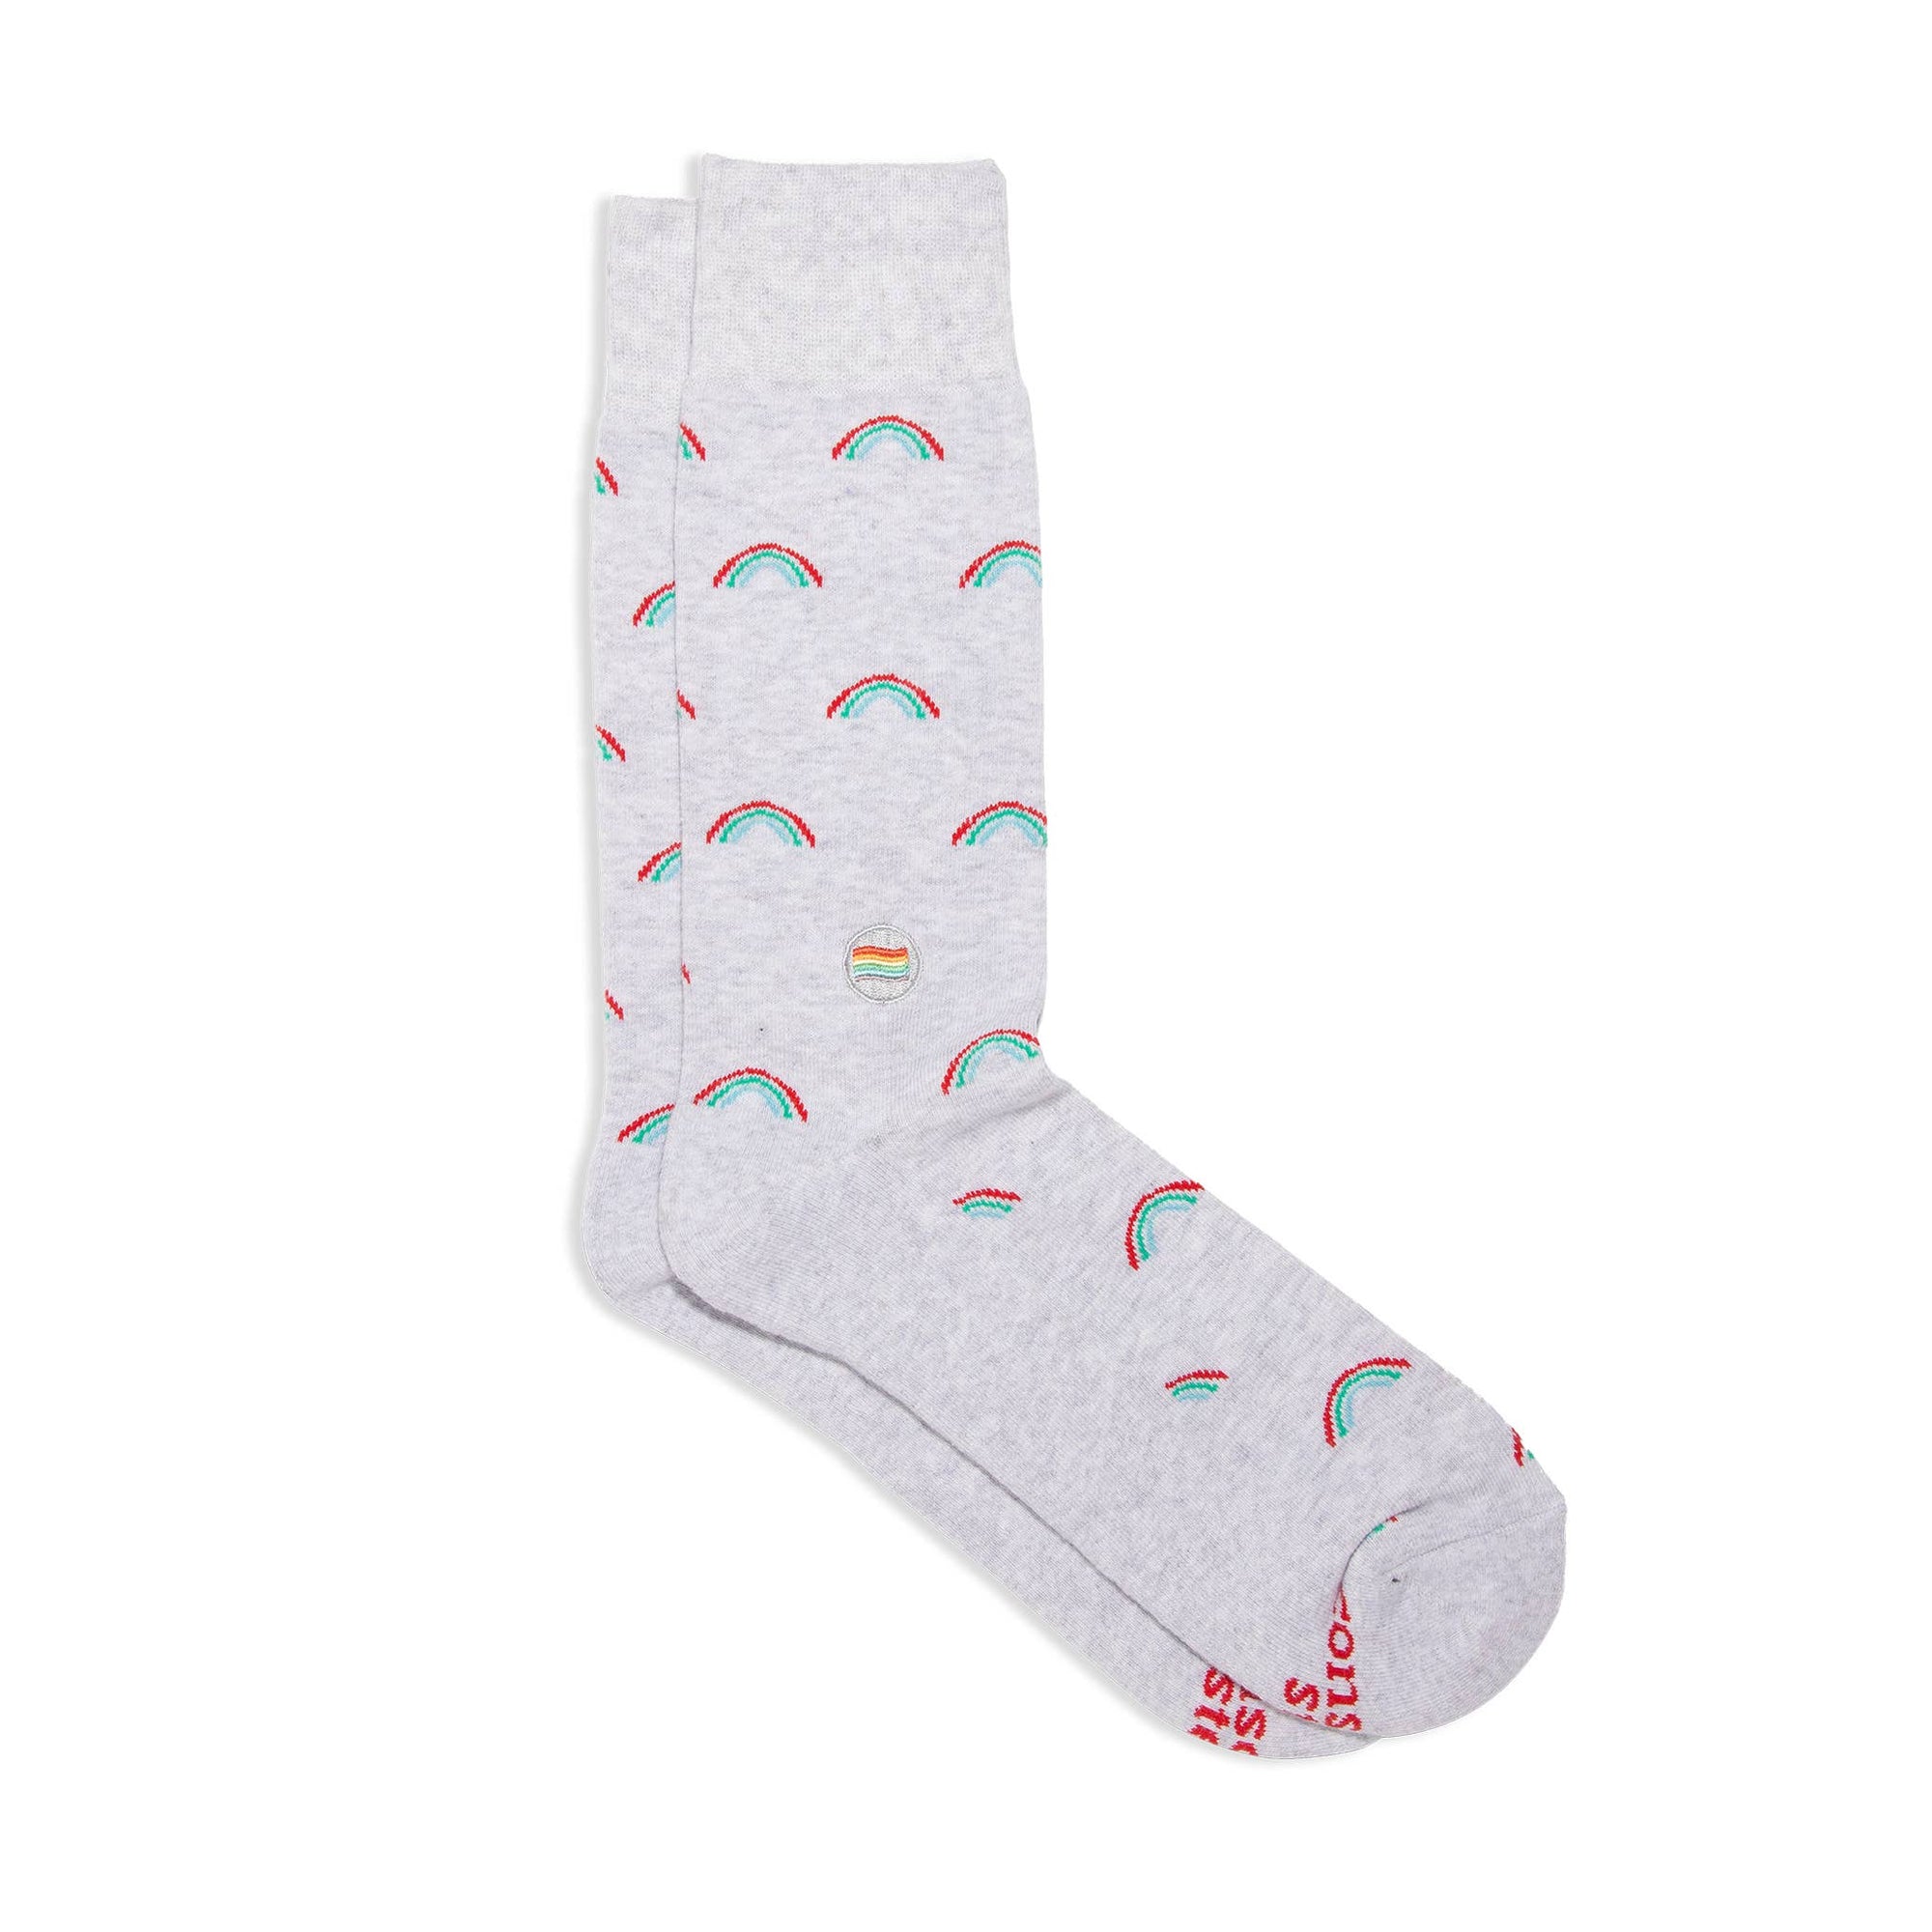 Socks that Save LGBTQ Lives (Radiant Rainbows)